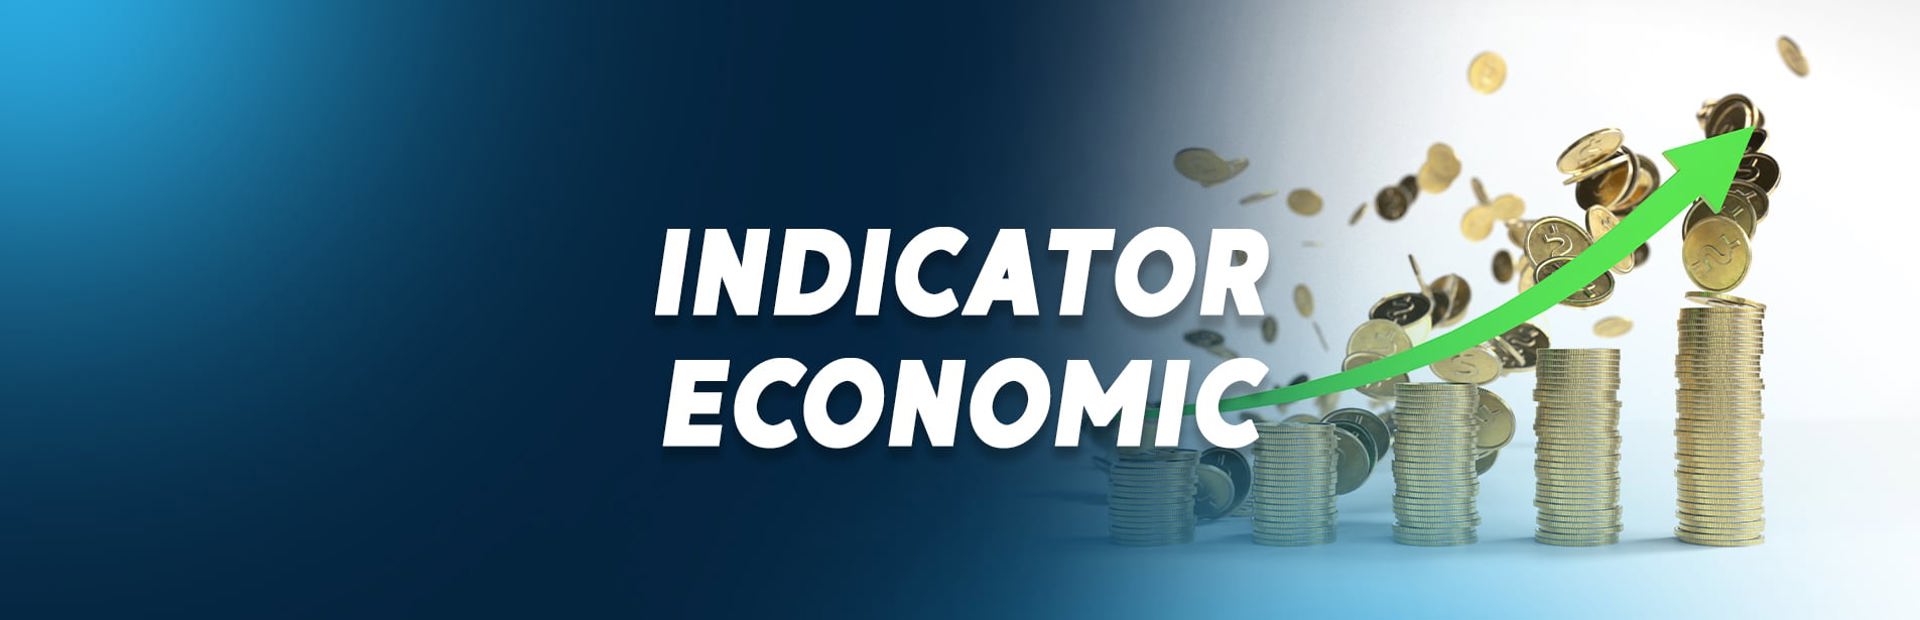 Indicator economic